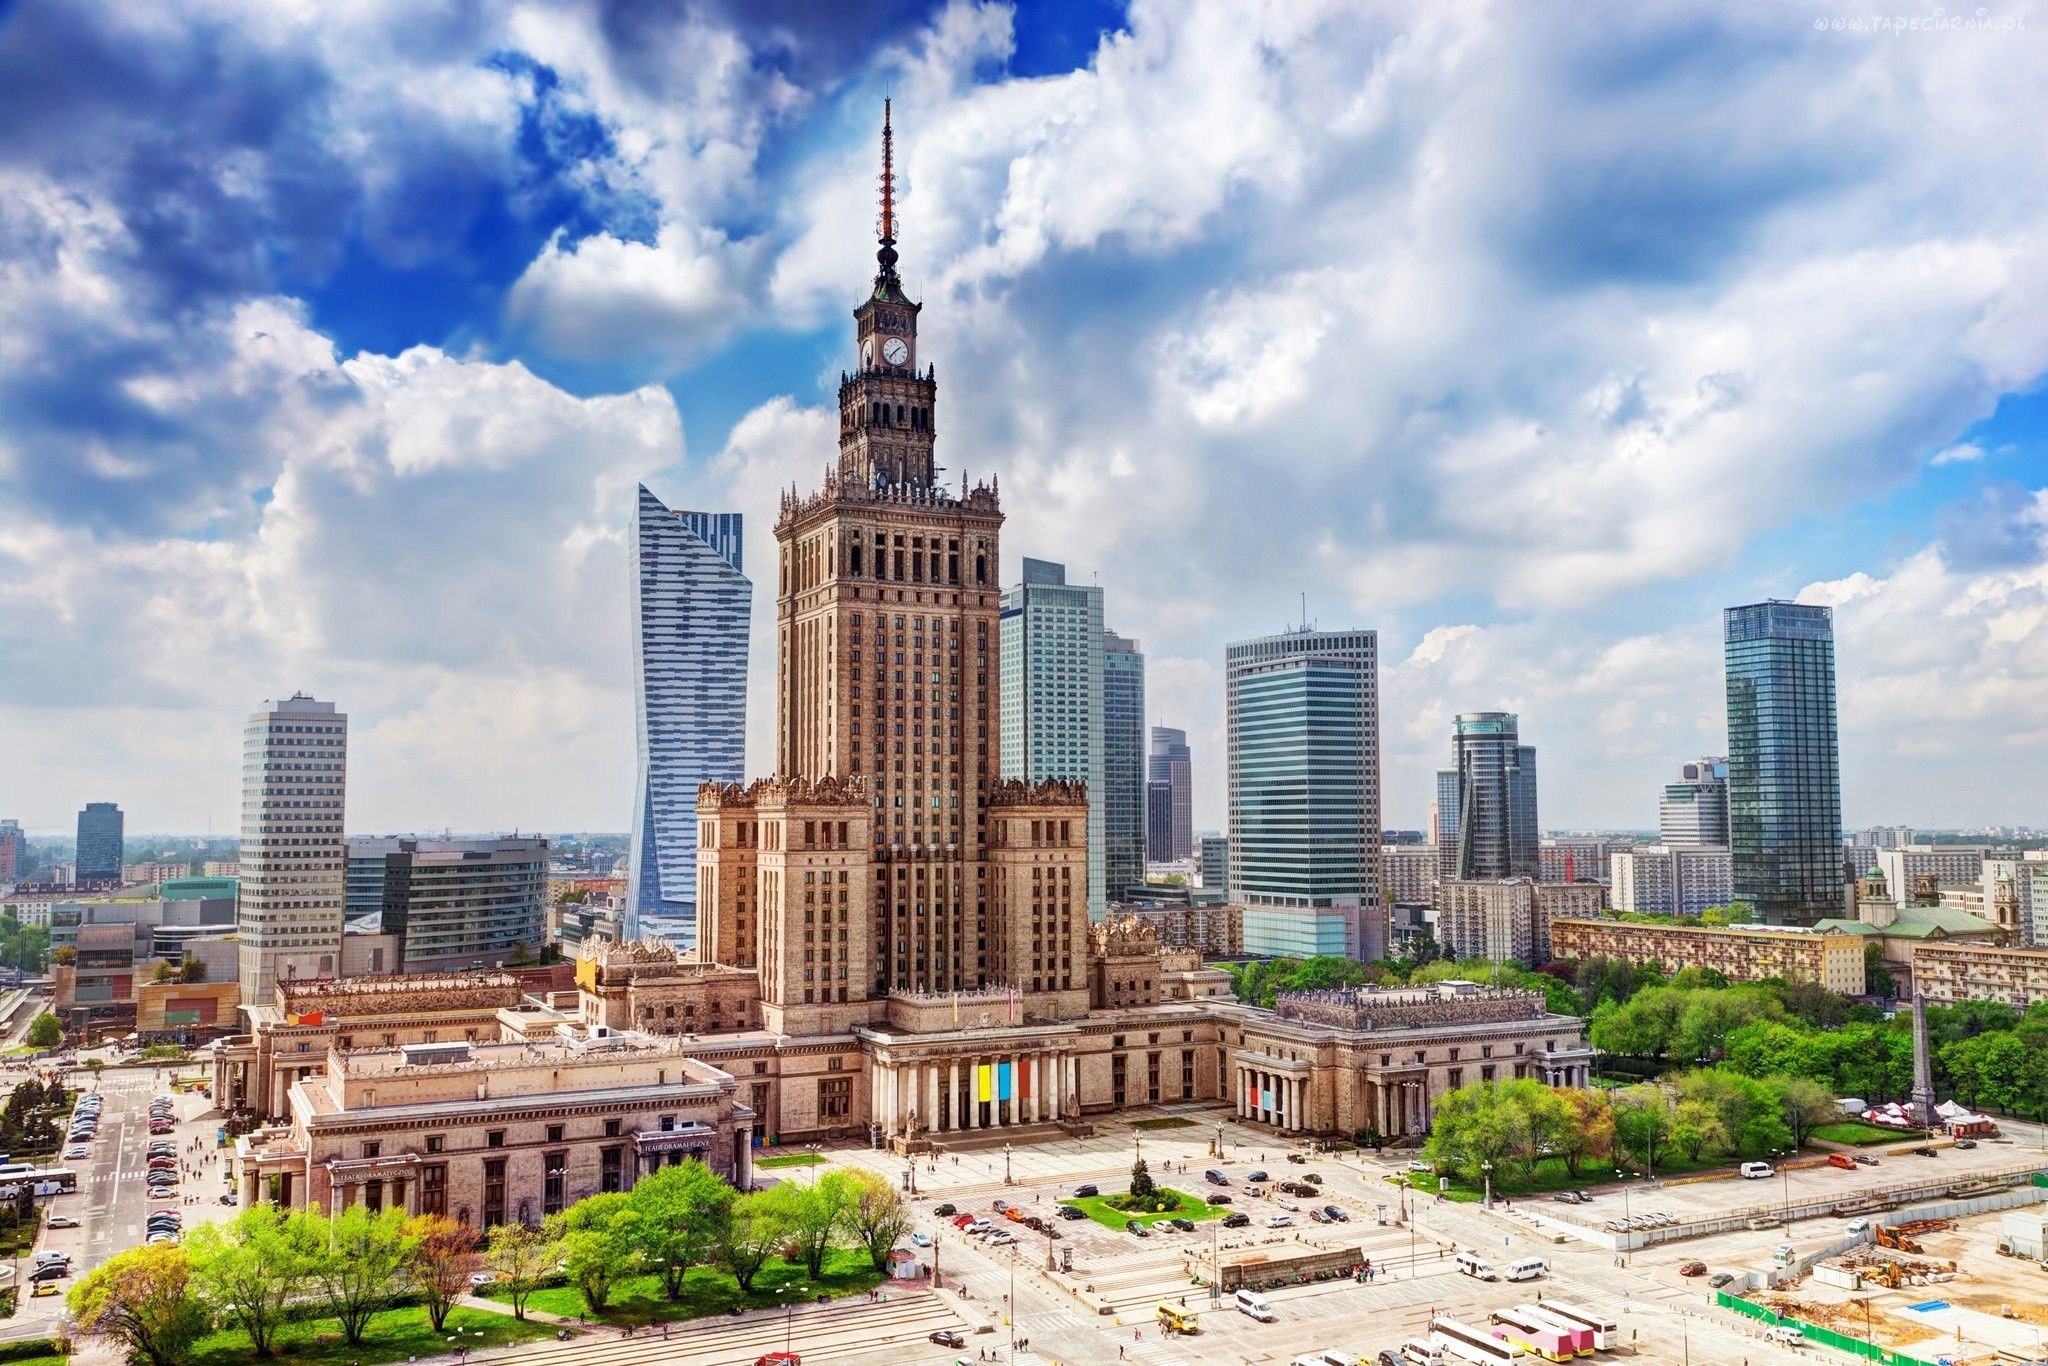  Warszawa, grad u kojem su živjeli Frédéric Chopin i Maria Curie